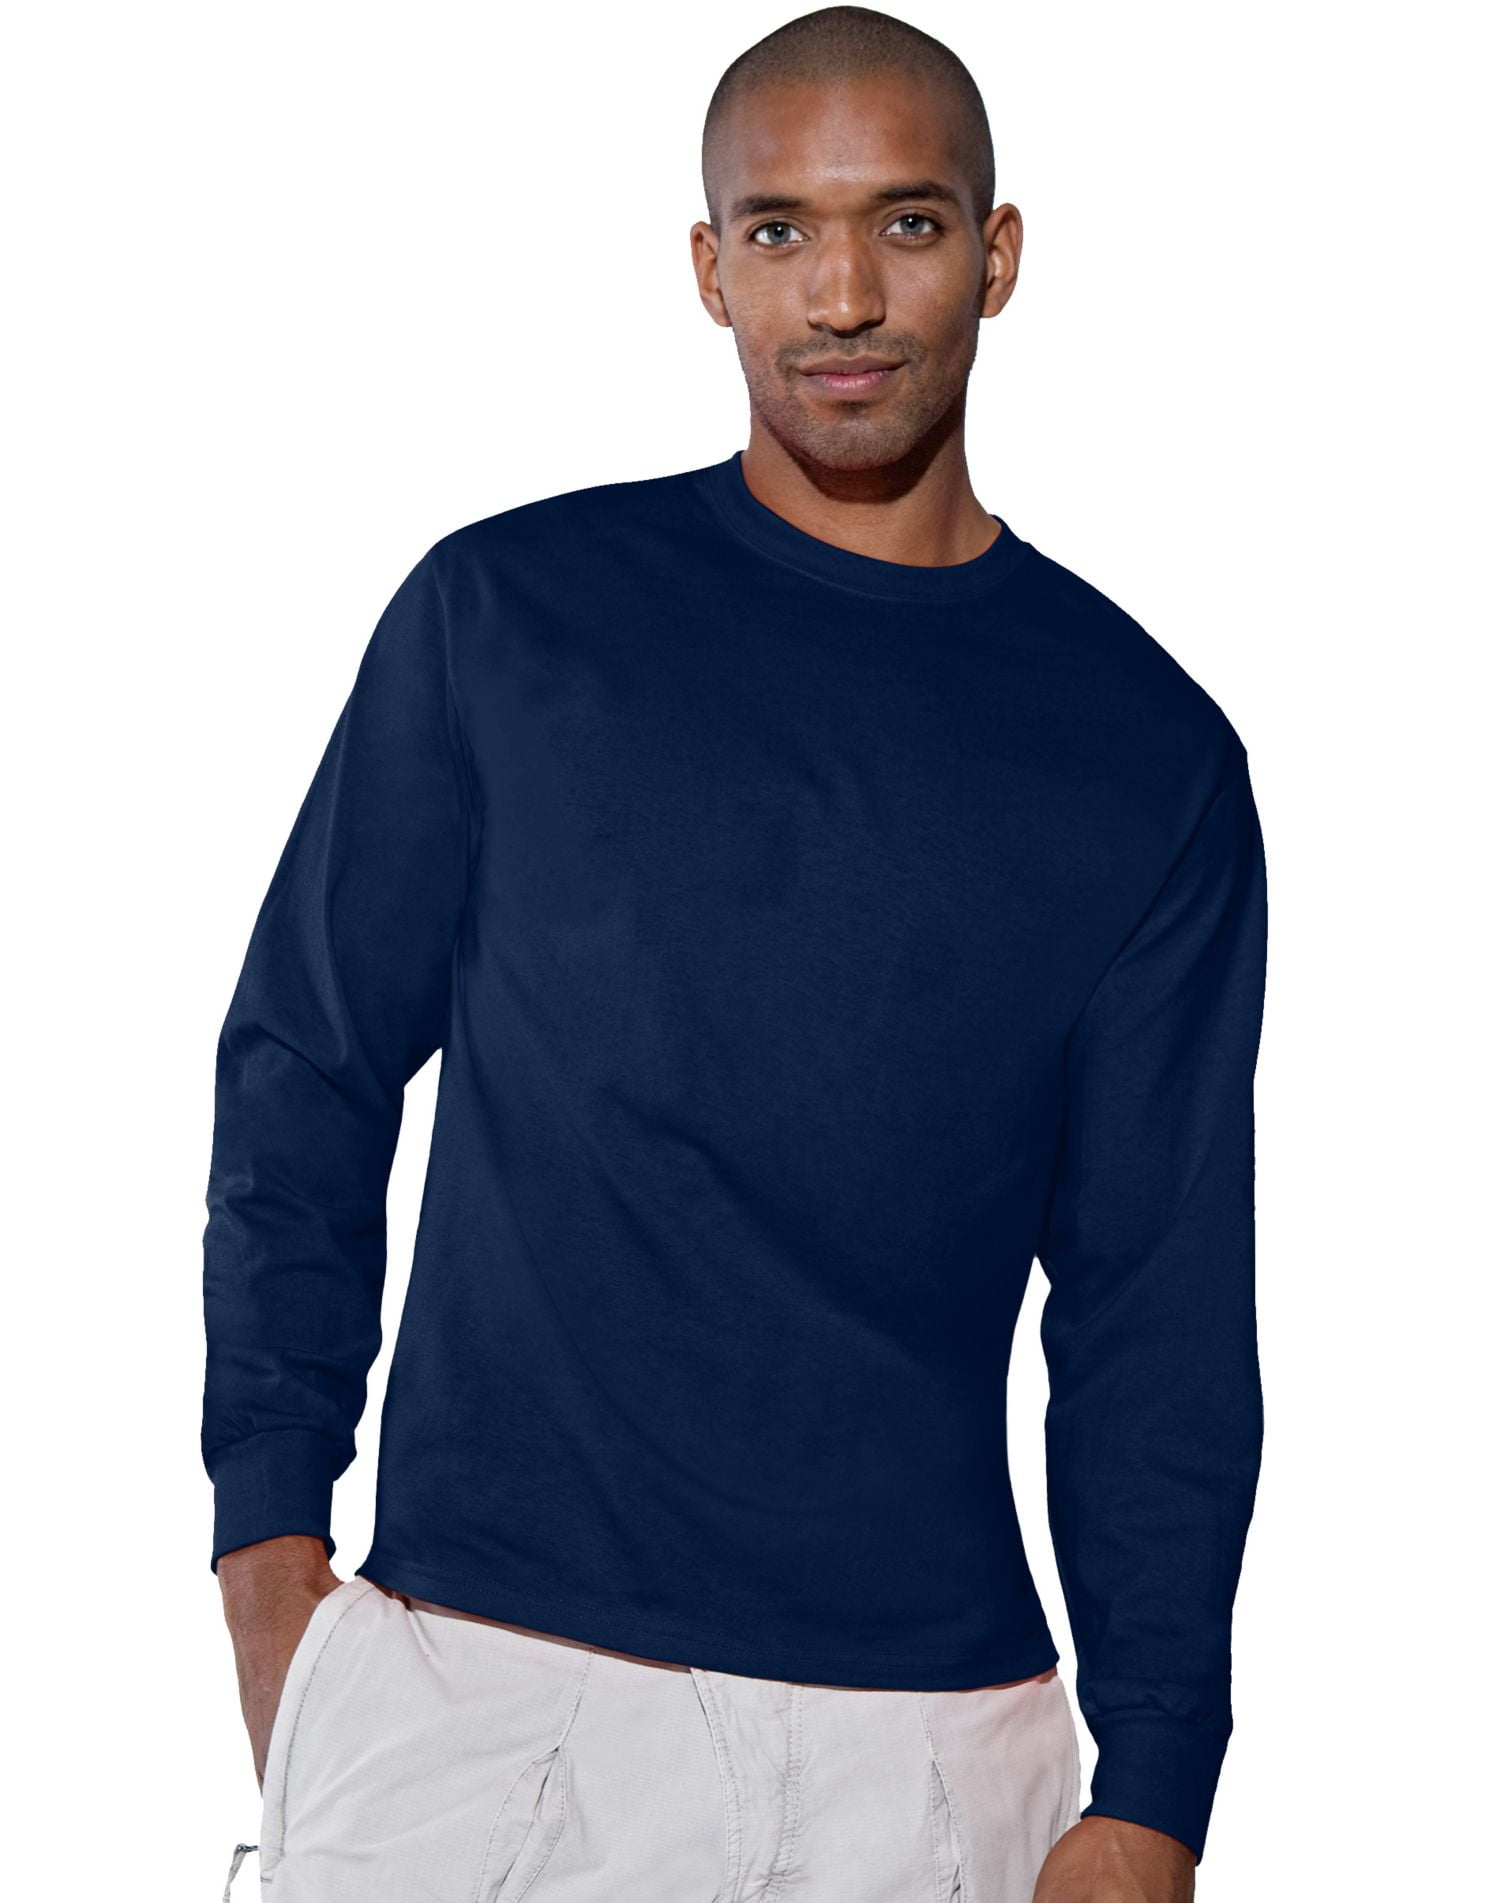 Hanes Men Crewneck Long Sleeve fashion t shirts - Walmart.com